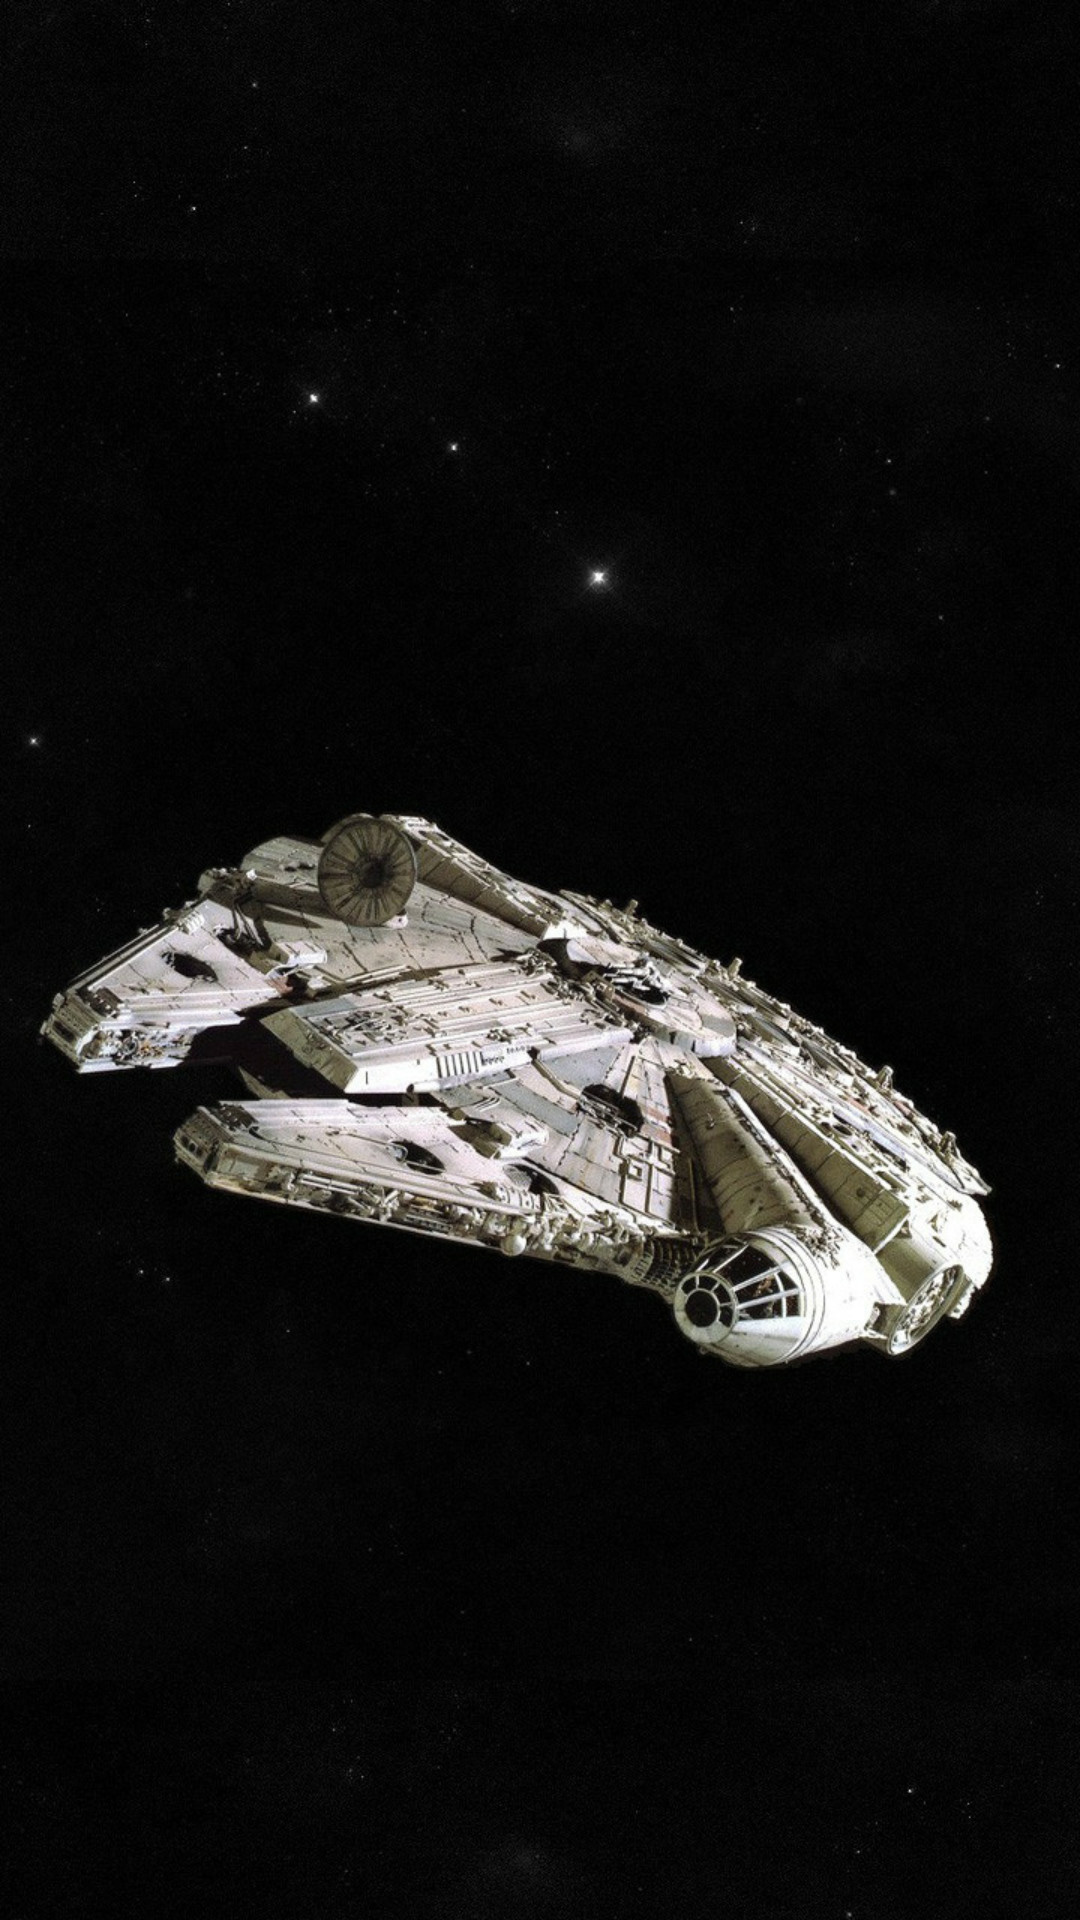 1080x1920 Millennium Falcon spaceship Star Wars Mobile Wallpaper 23285 